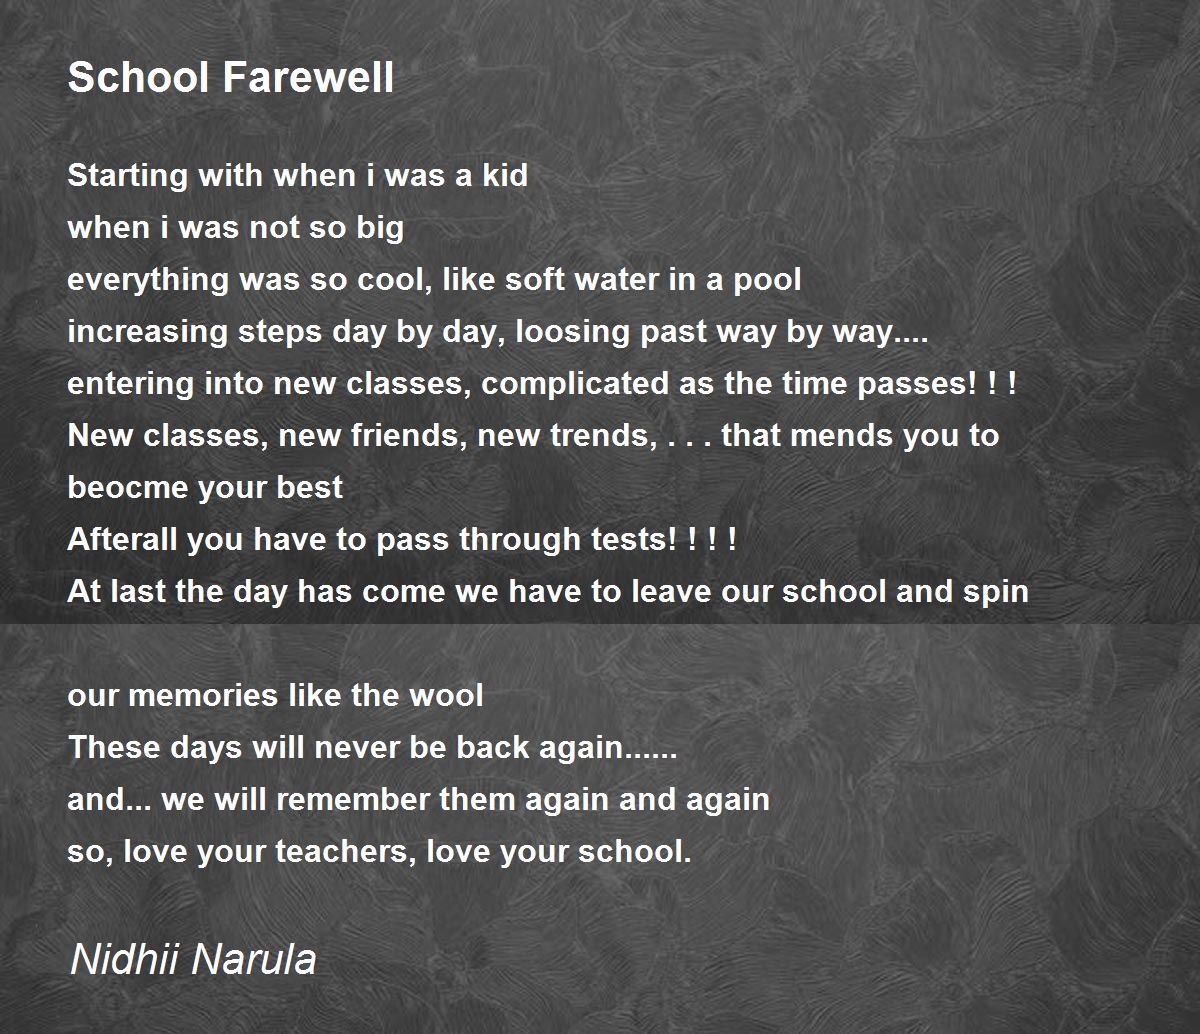 essay of school farewell